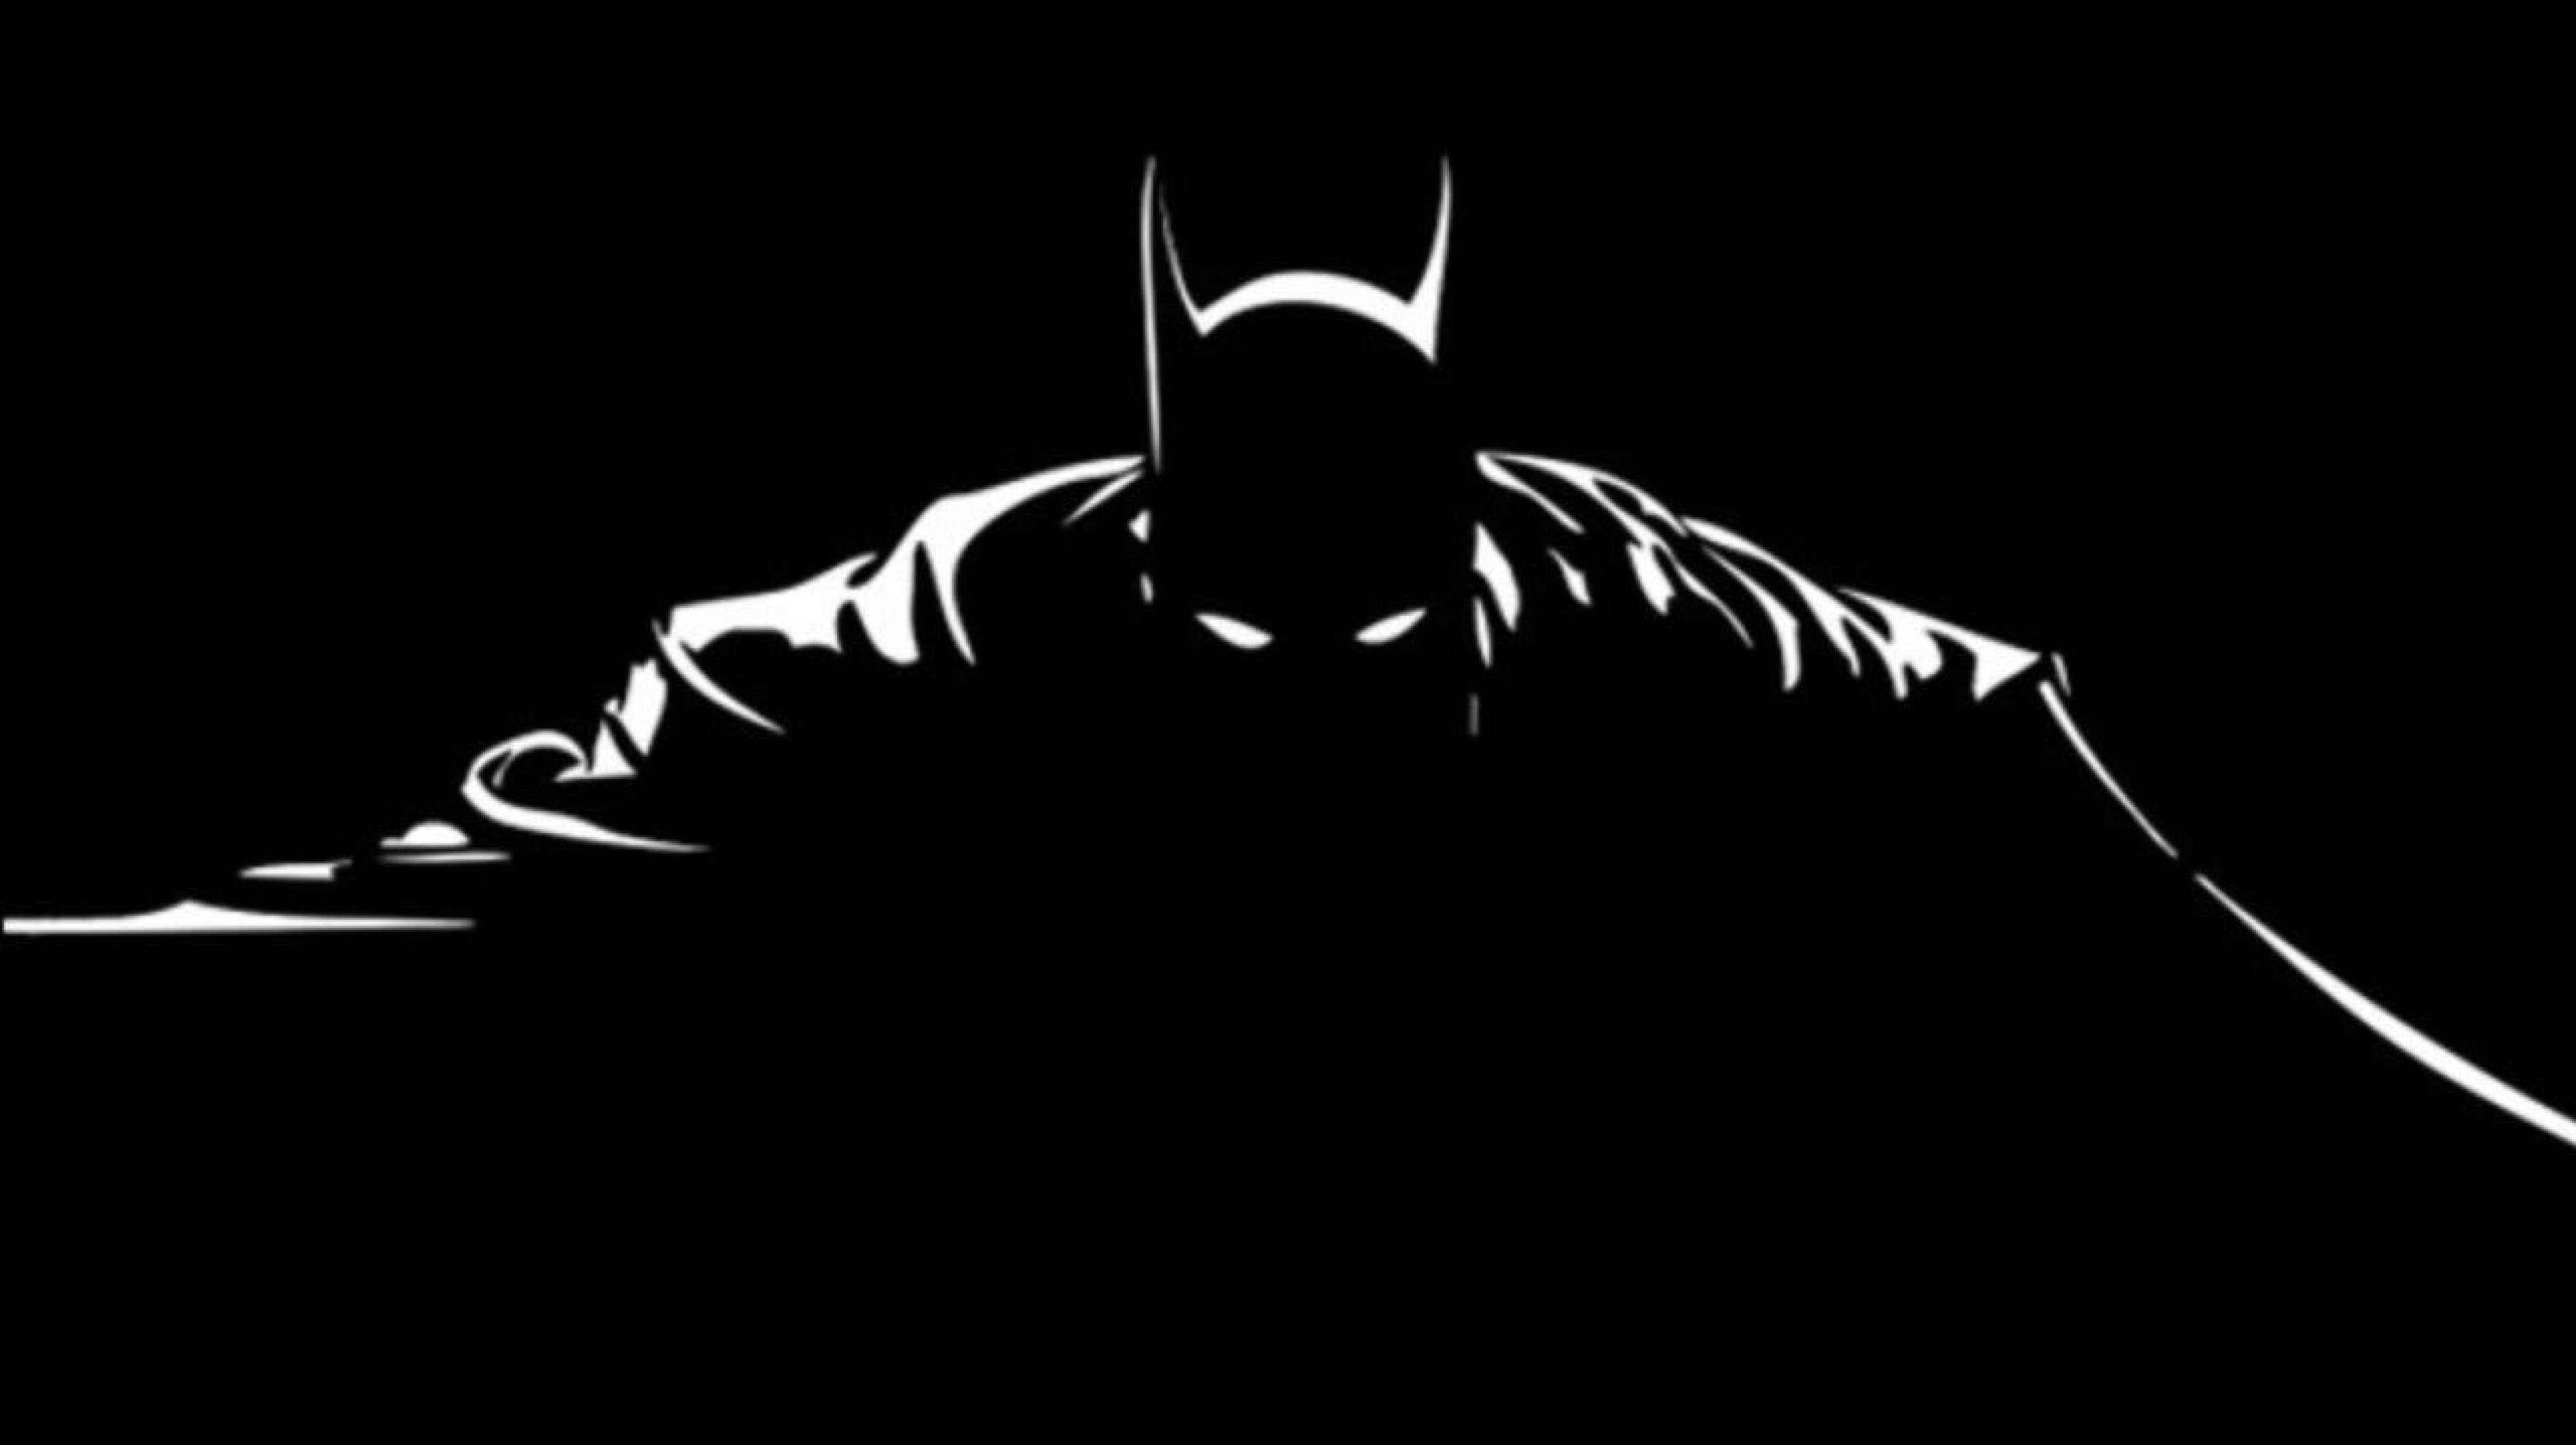 Batman black. Бэтмен на черном фоне. Арт на черном фоне. Бэтмен на темном фоне. Логотип Бэтмена на черном фоне.